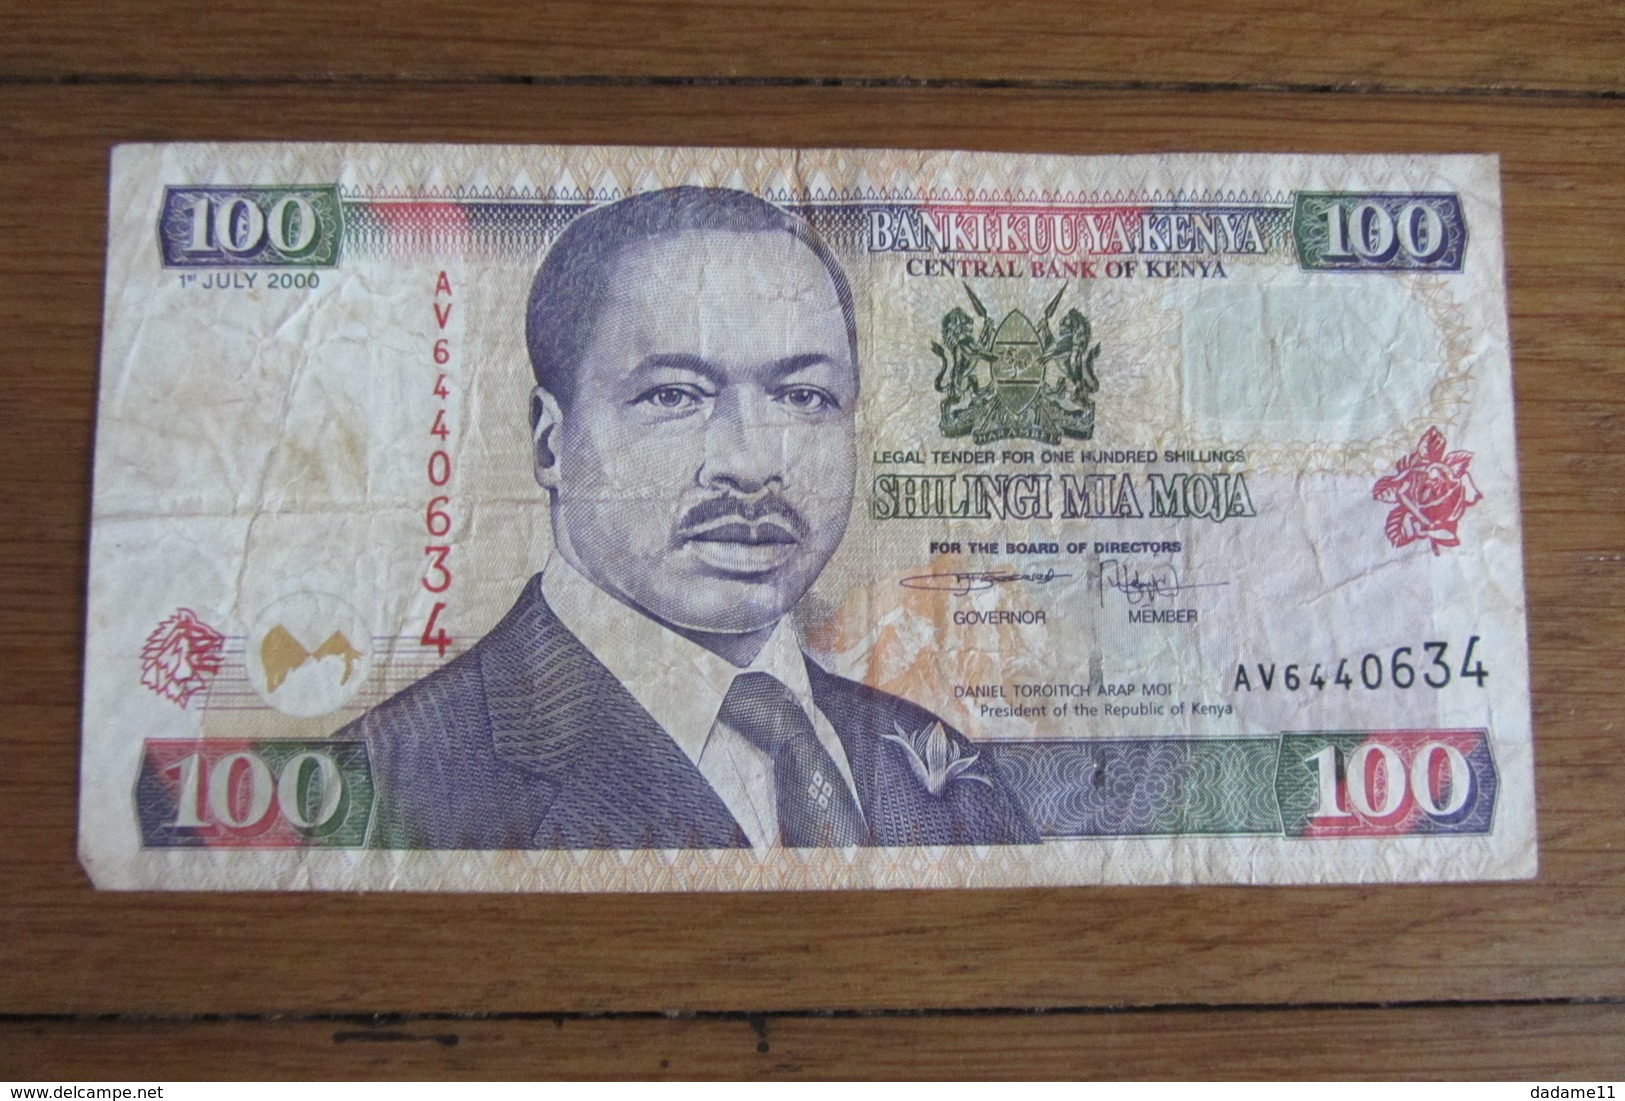 100 Shillingi Kenya - Kenya